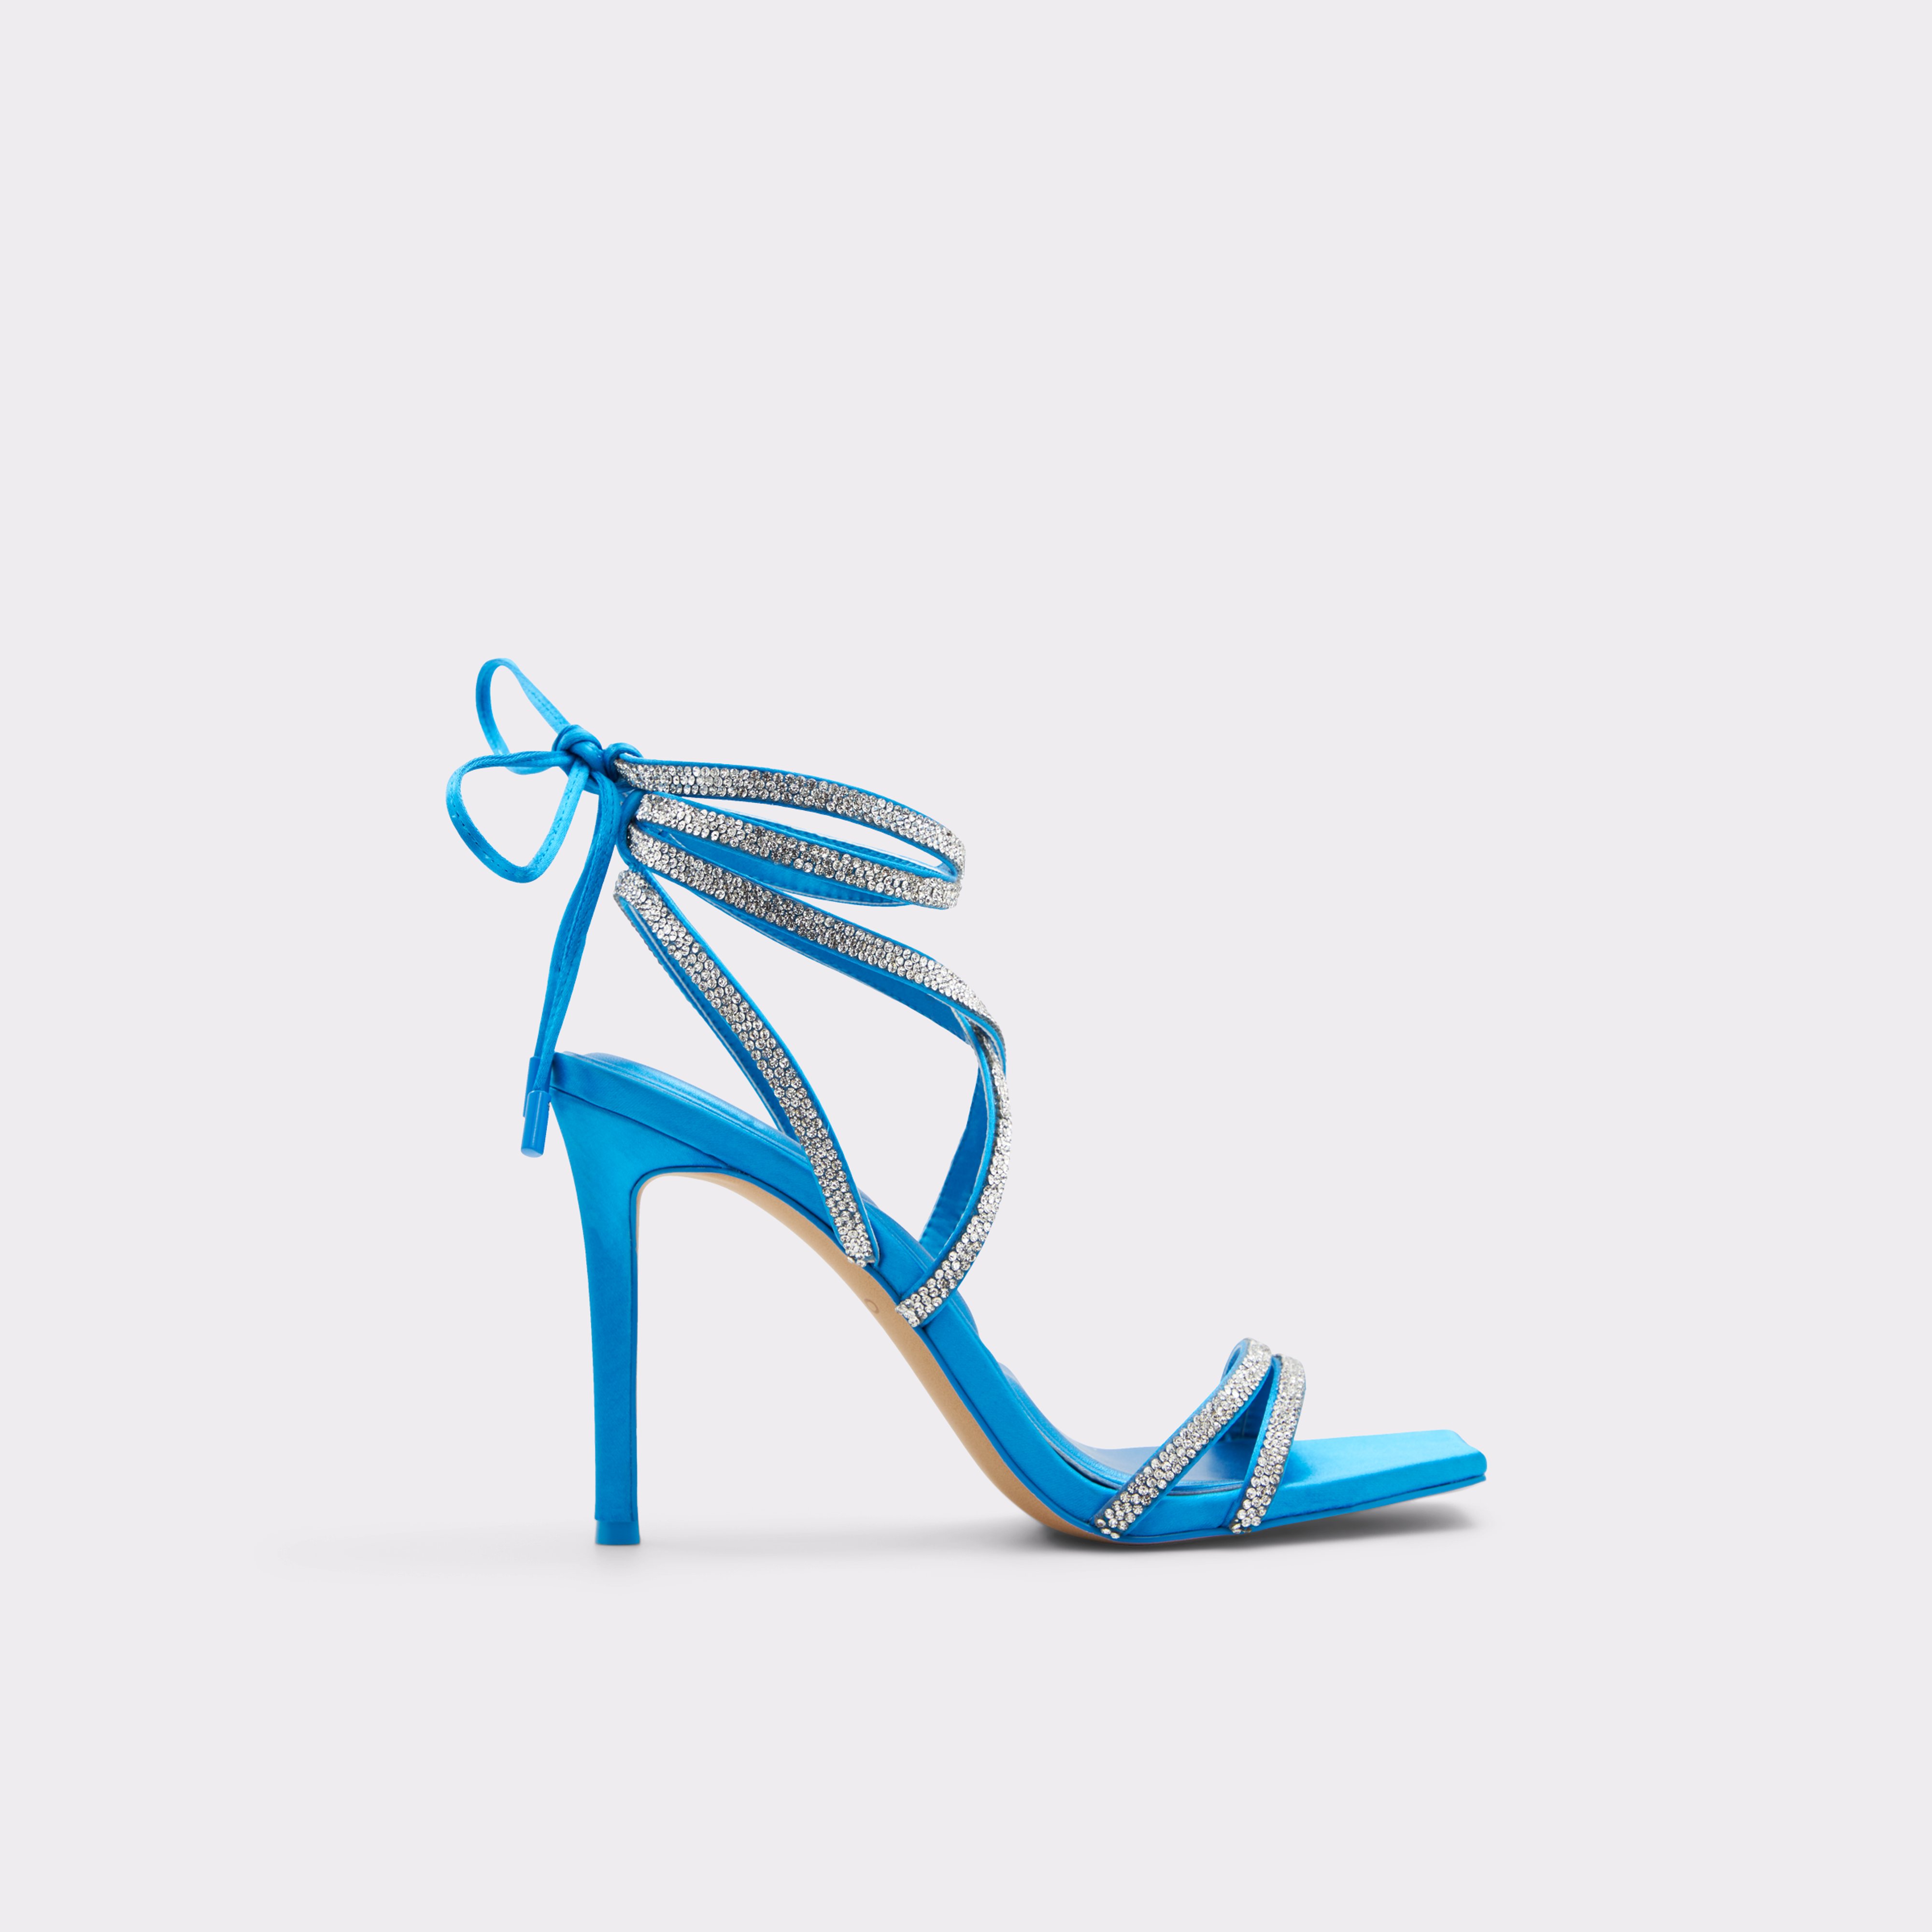 Comfy Heels For Women | Stilettos & High Heels in Blue | ALDO Canada